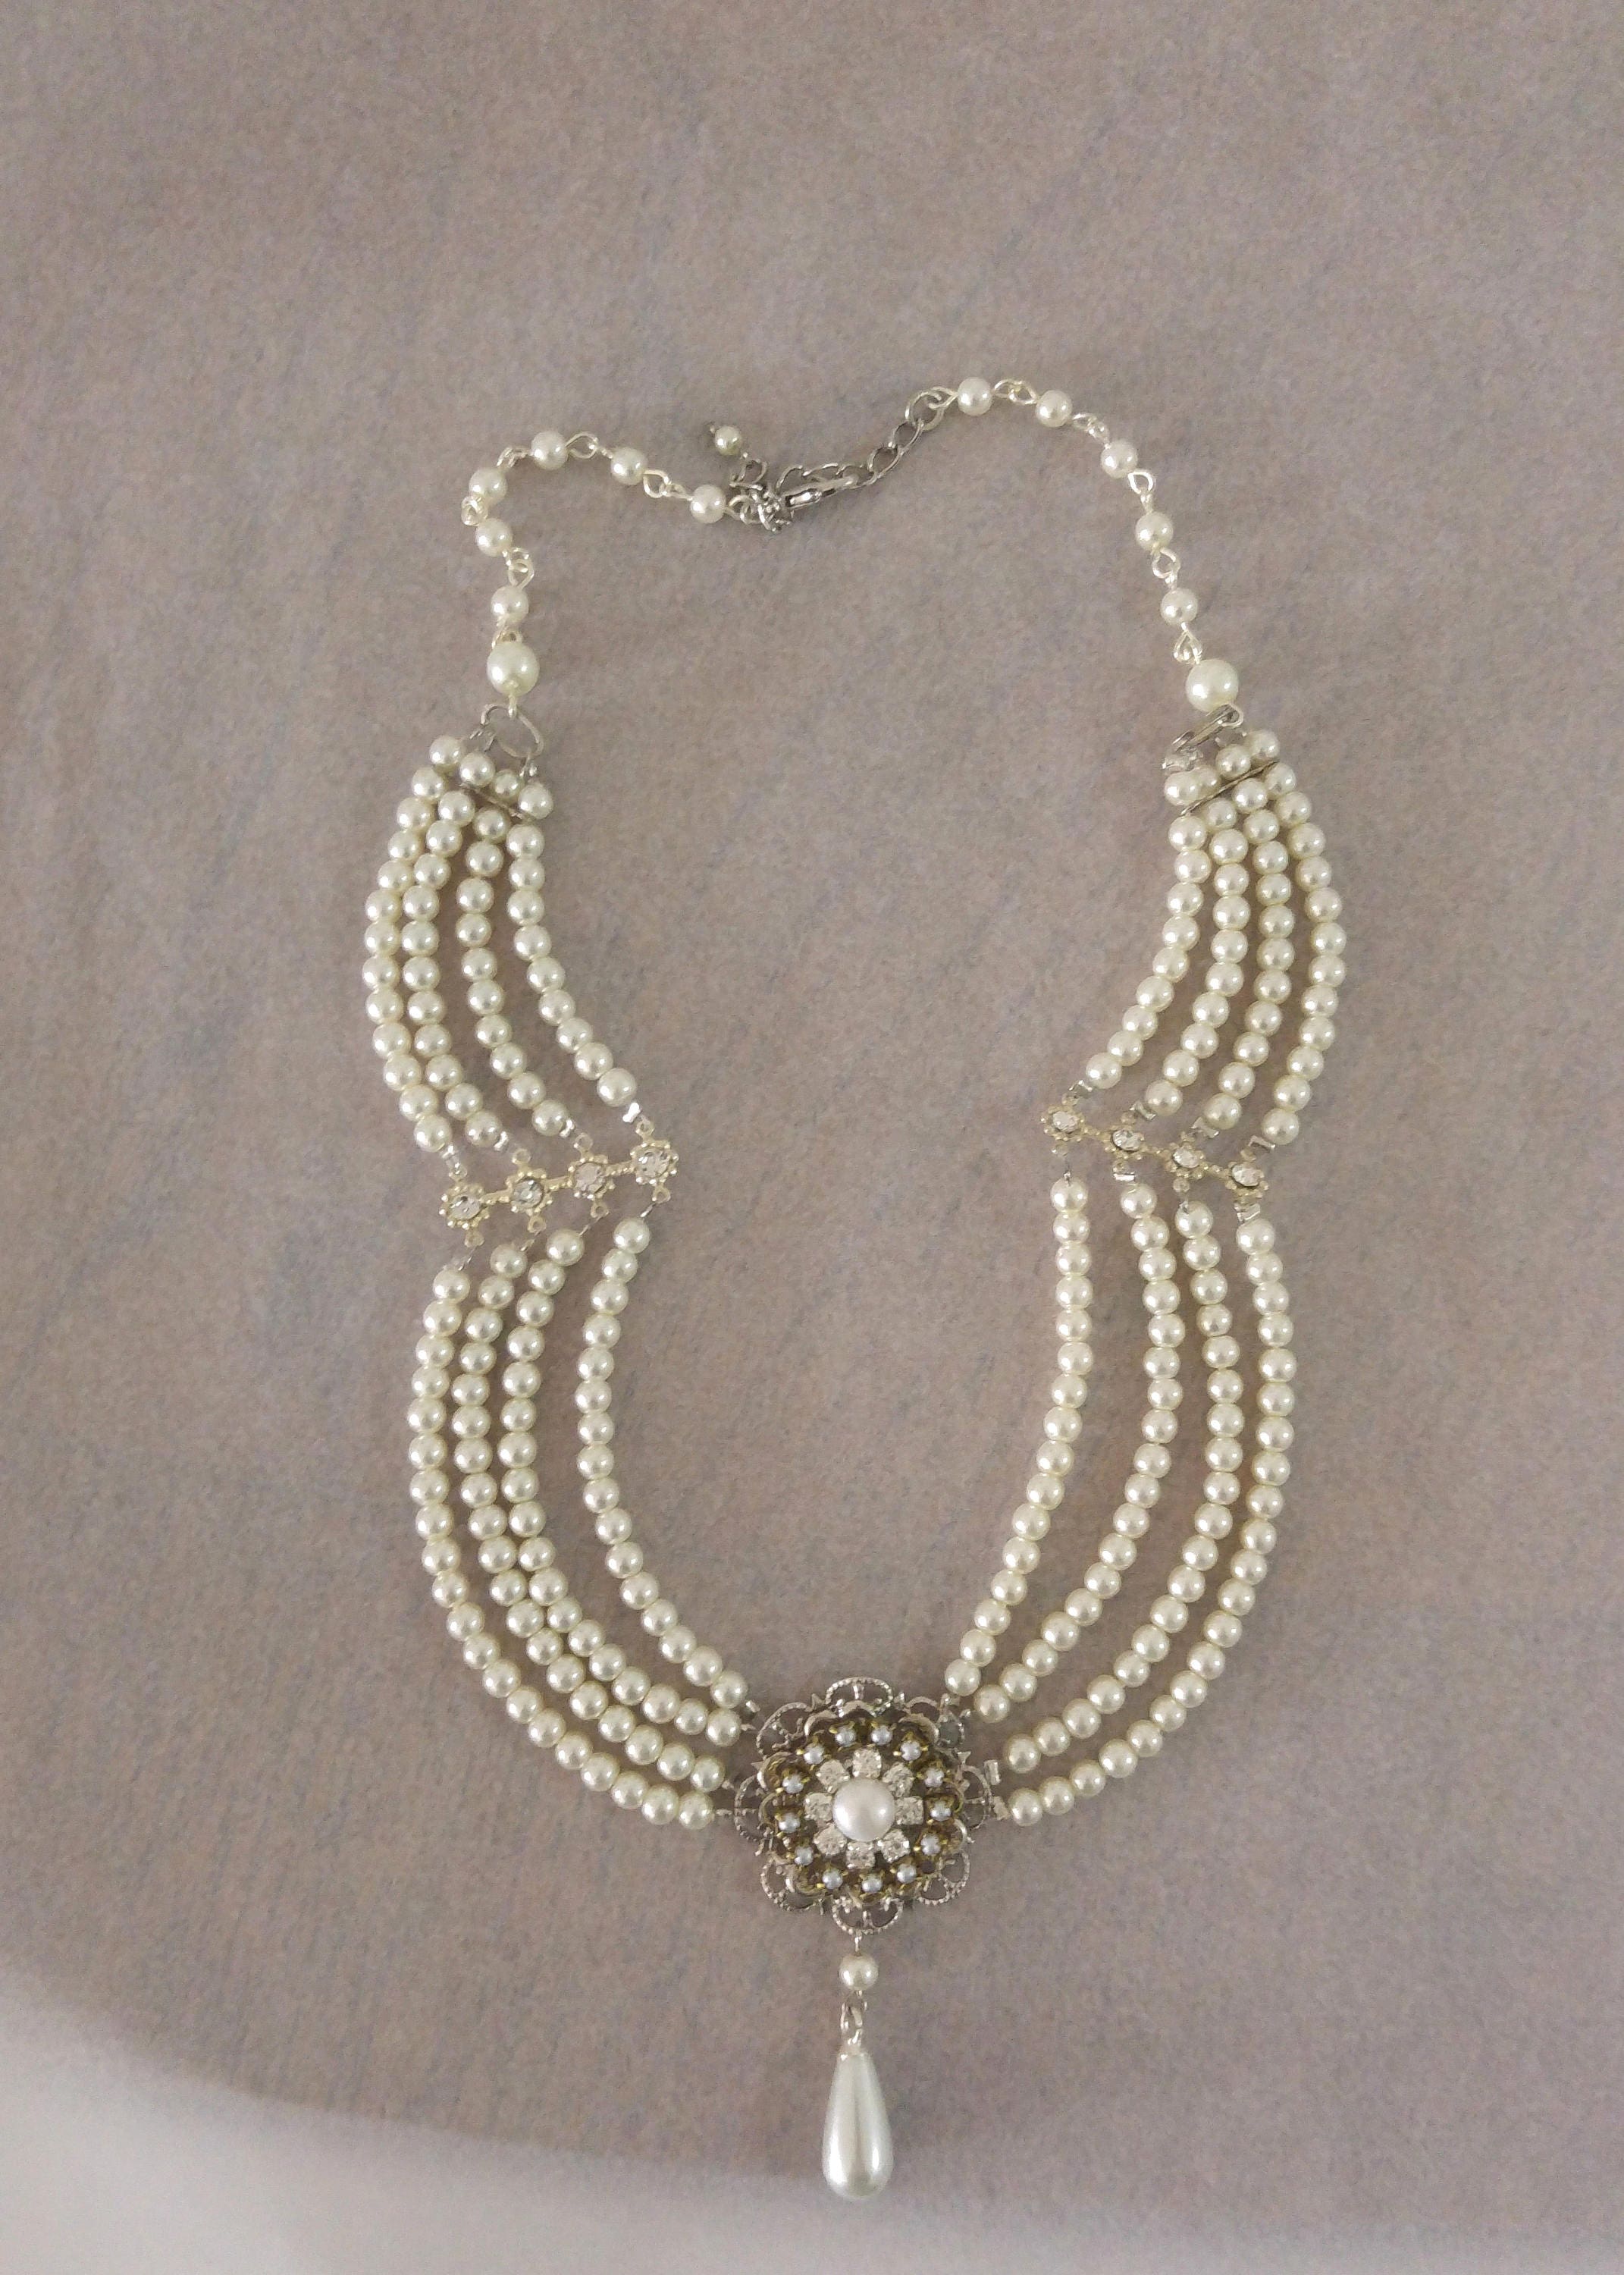 Bridal Pearls Choker Silver Filigree Ivory Pearls Rhinestone | Etsy